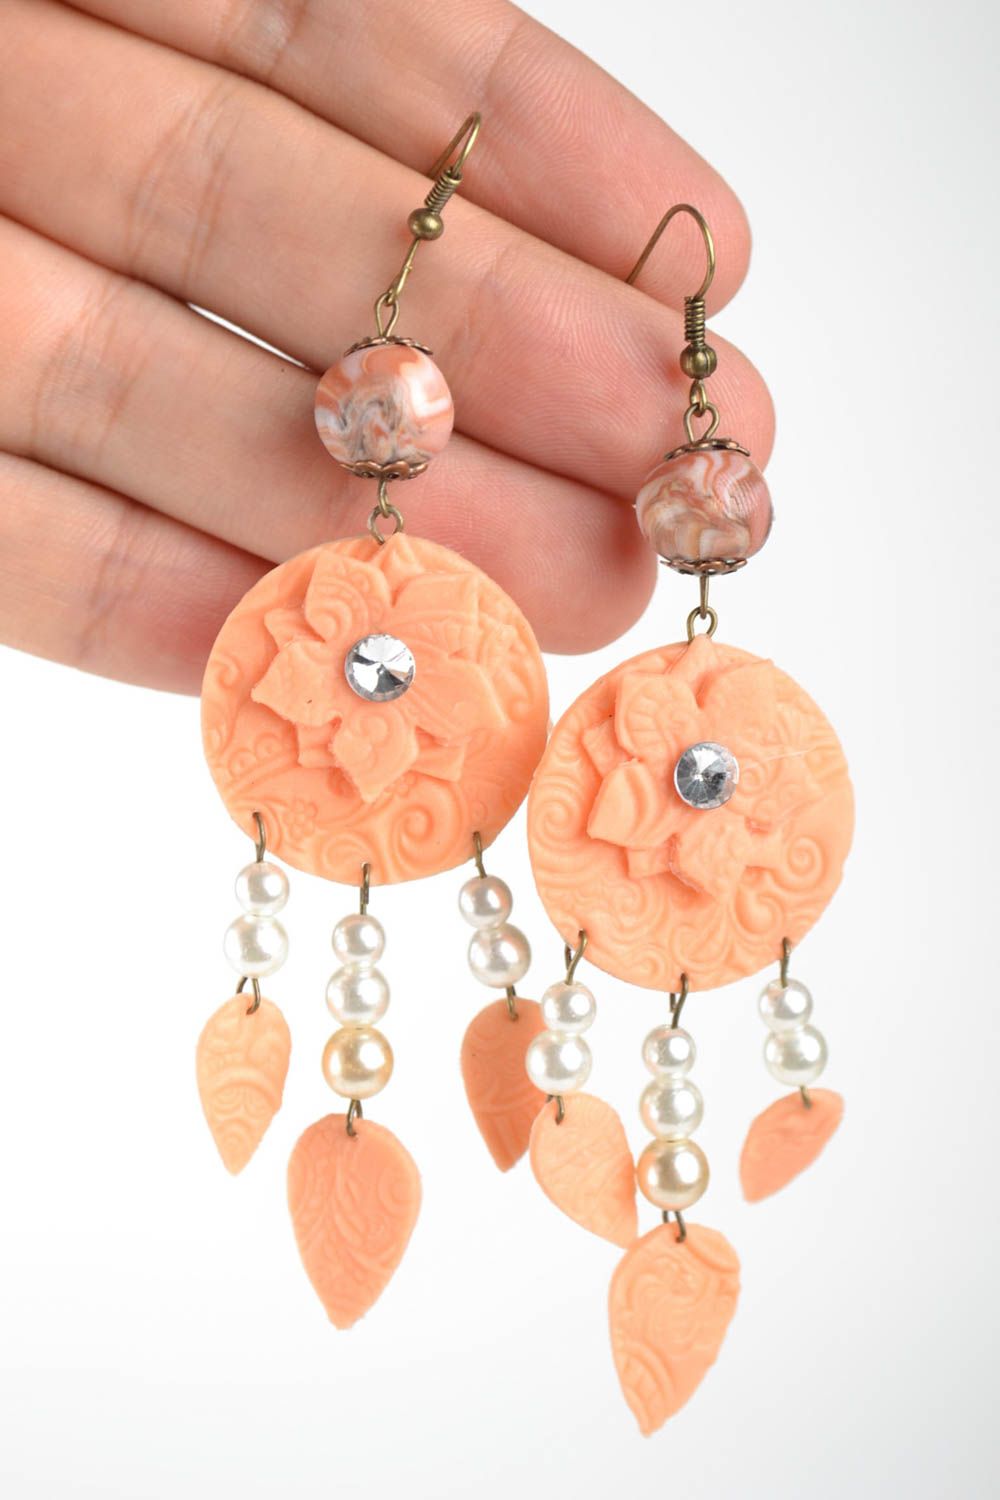 Dangling earrings handmade jewellery polymer clay designer earrings gift ideas photo 4